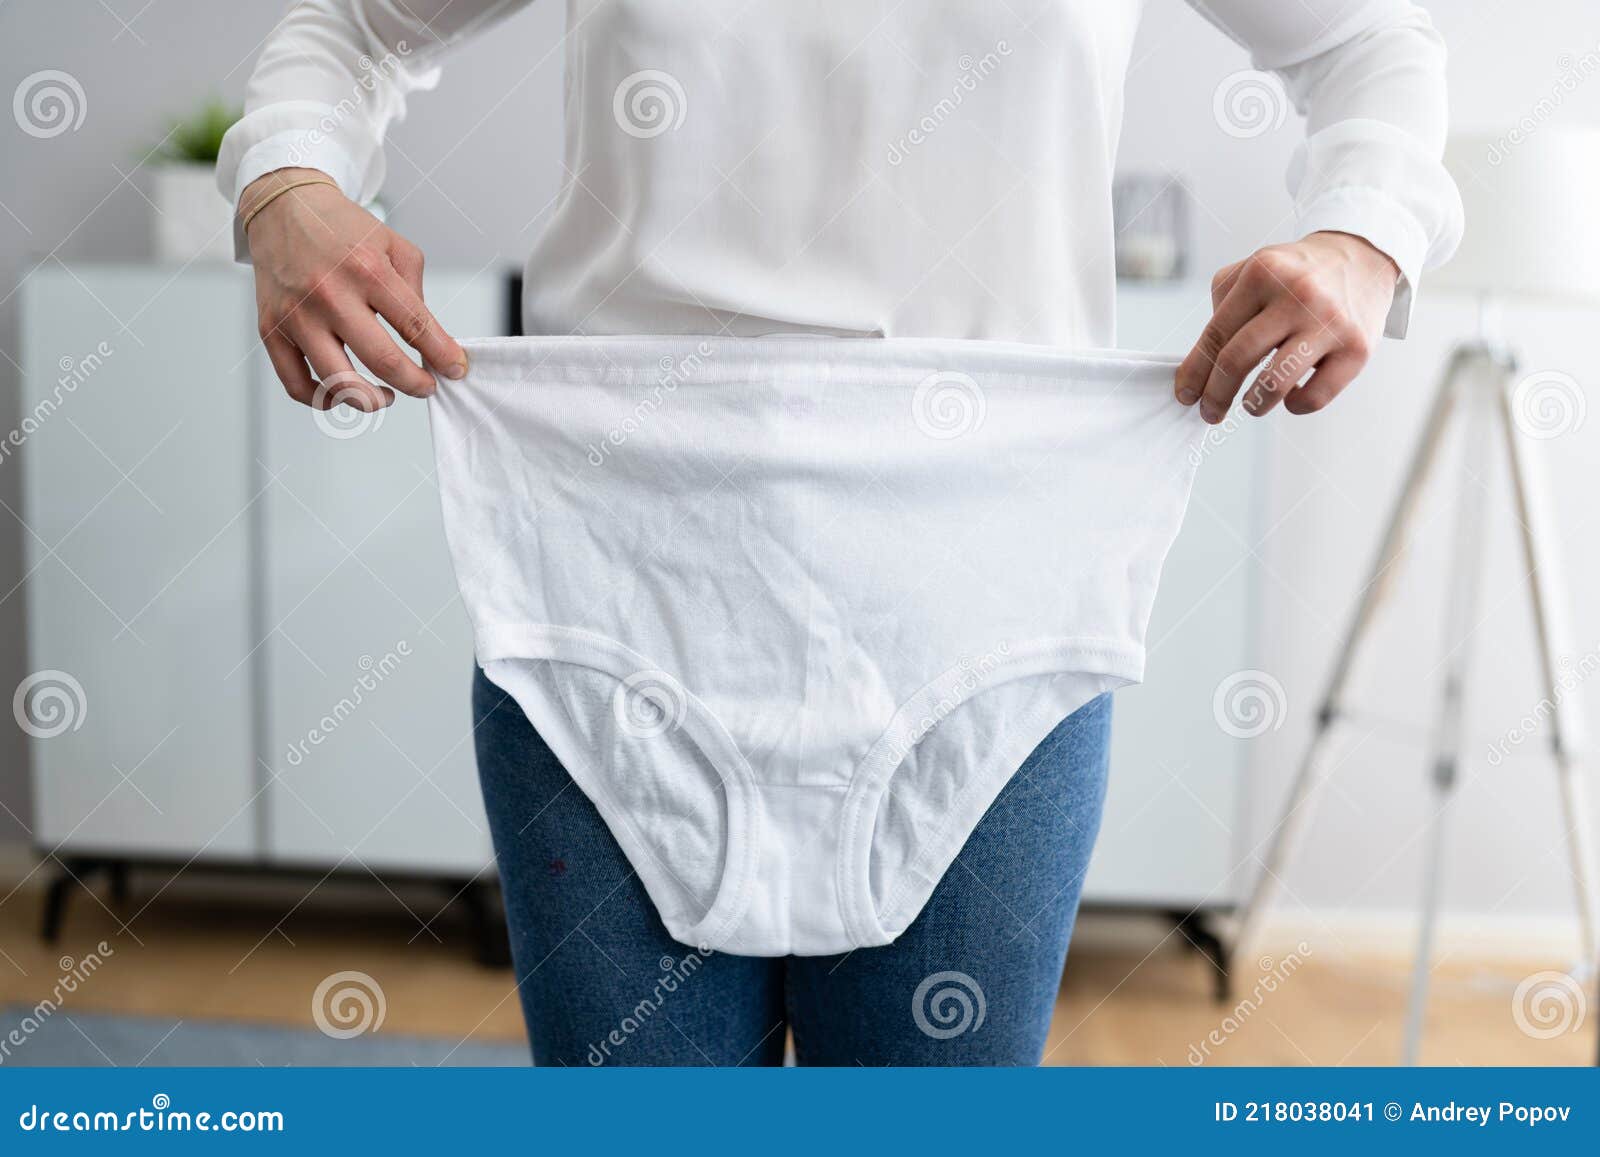 Best of Granny in underwear pics